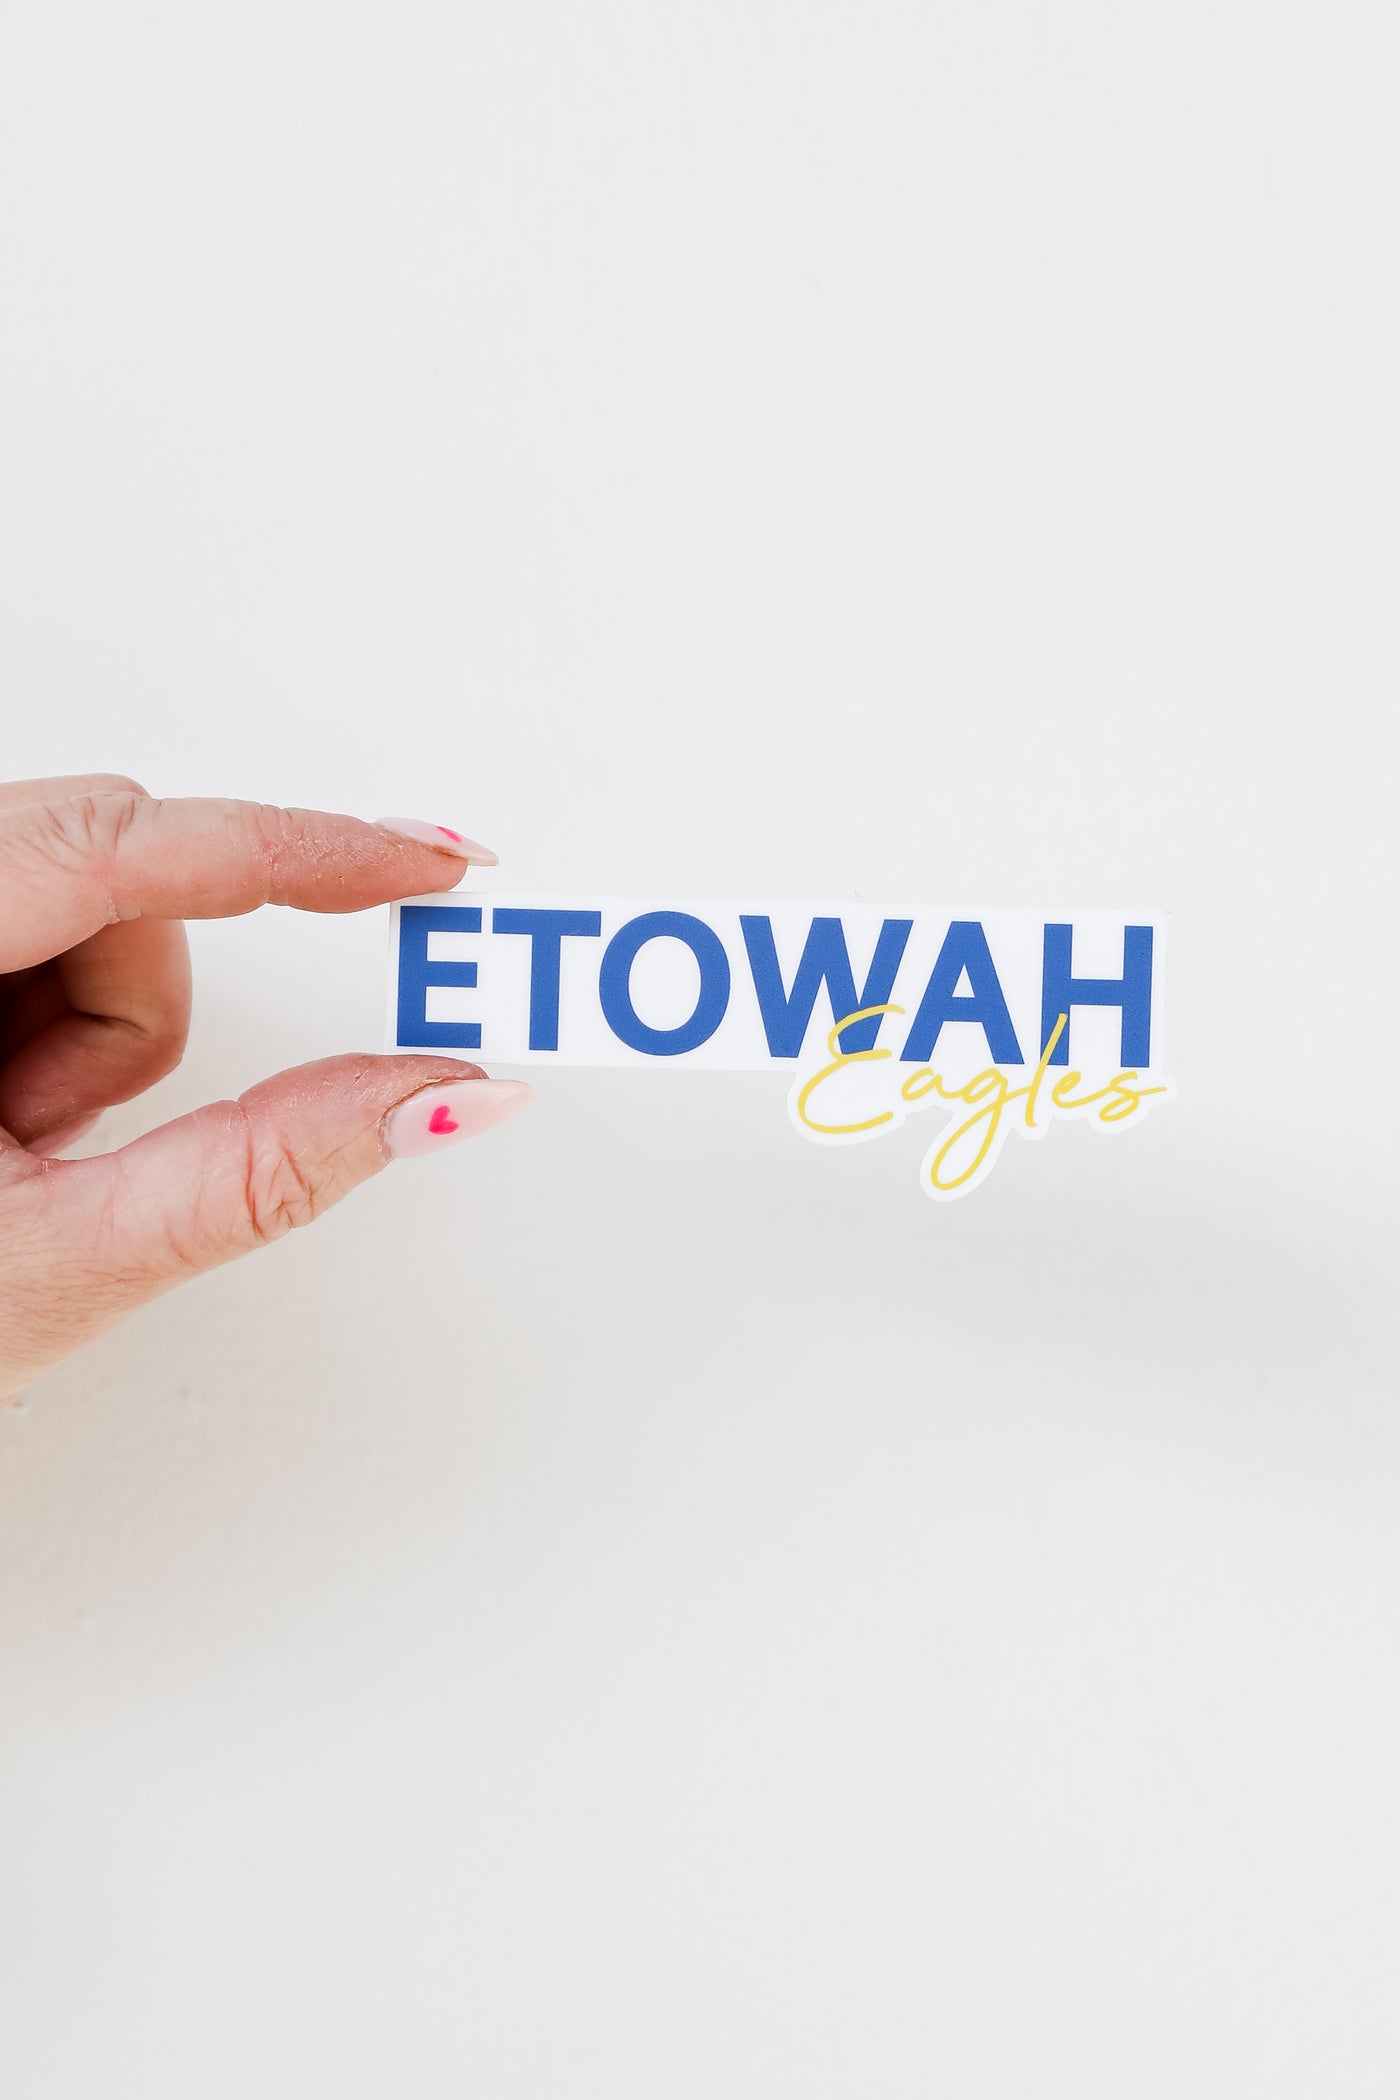 Etowah Eagles Sticker flat lay